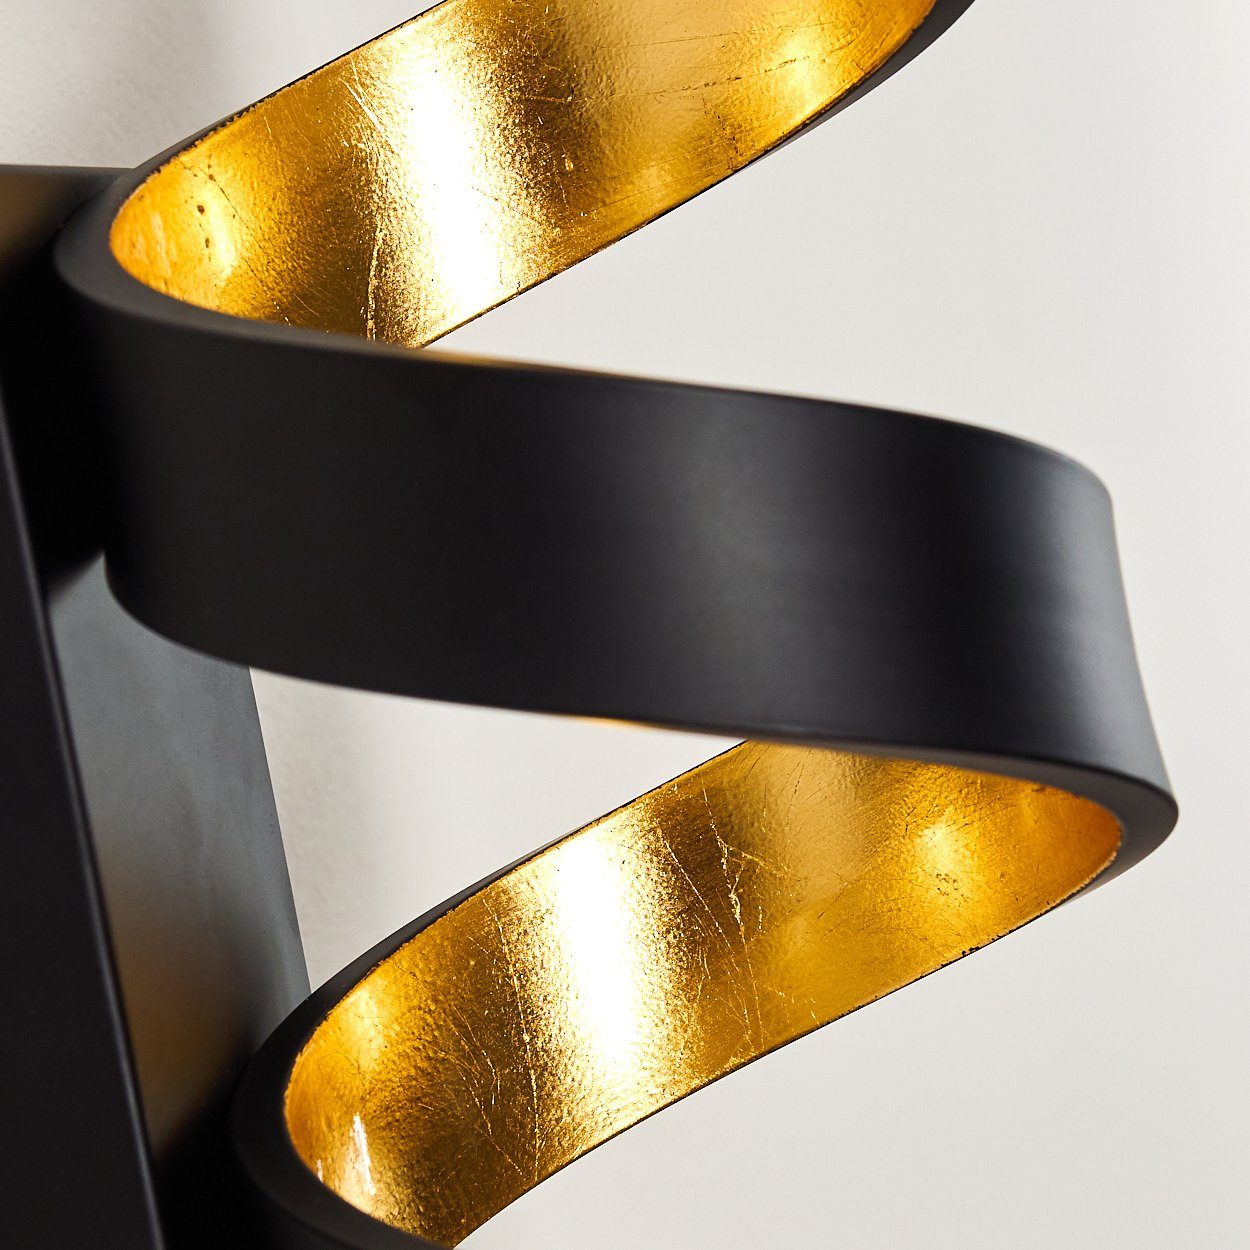 »Delia« Schwarz/Gold, 3x3 Kelvin, aus der Wandleuchte Lichteffekt 450 Wandlampe hofstein LED Lumen, Metall Innen. an Wand Watt, 3000 in